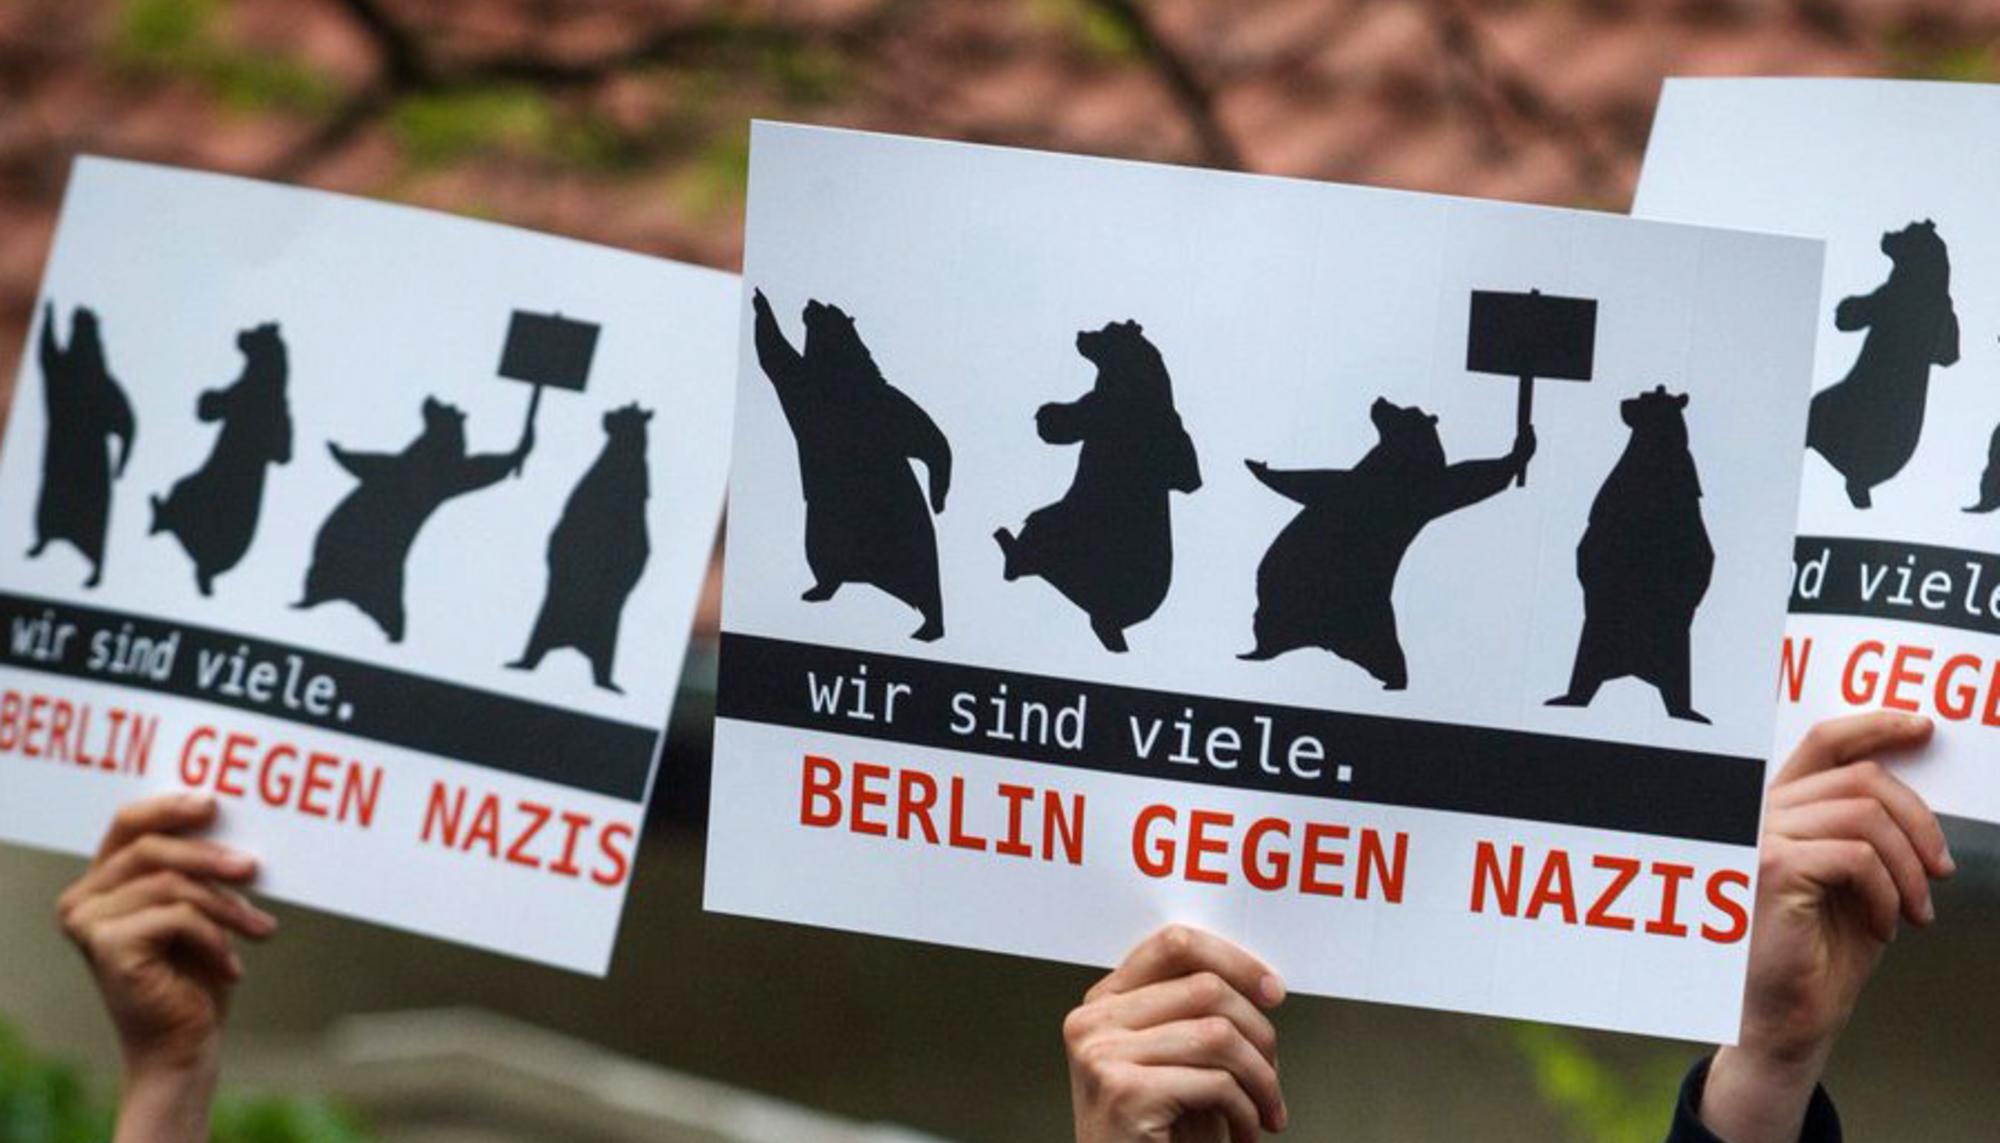 Berlin gegen Nazis